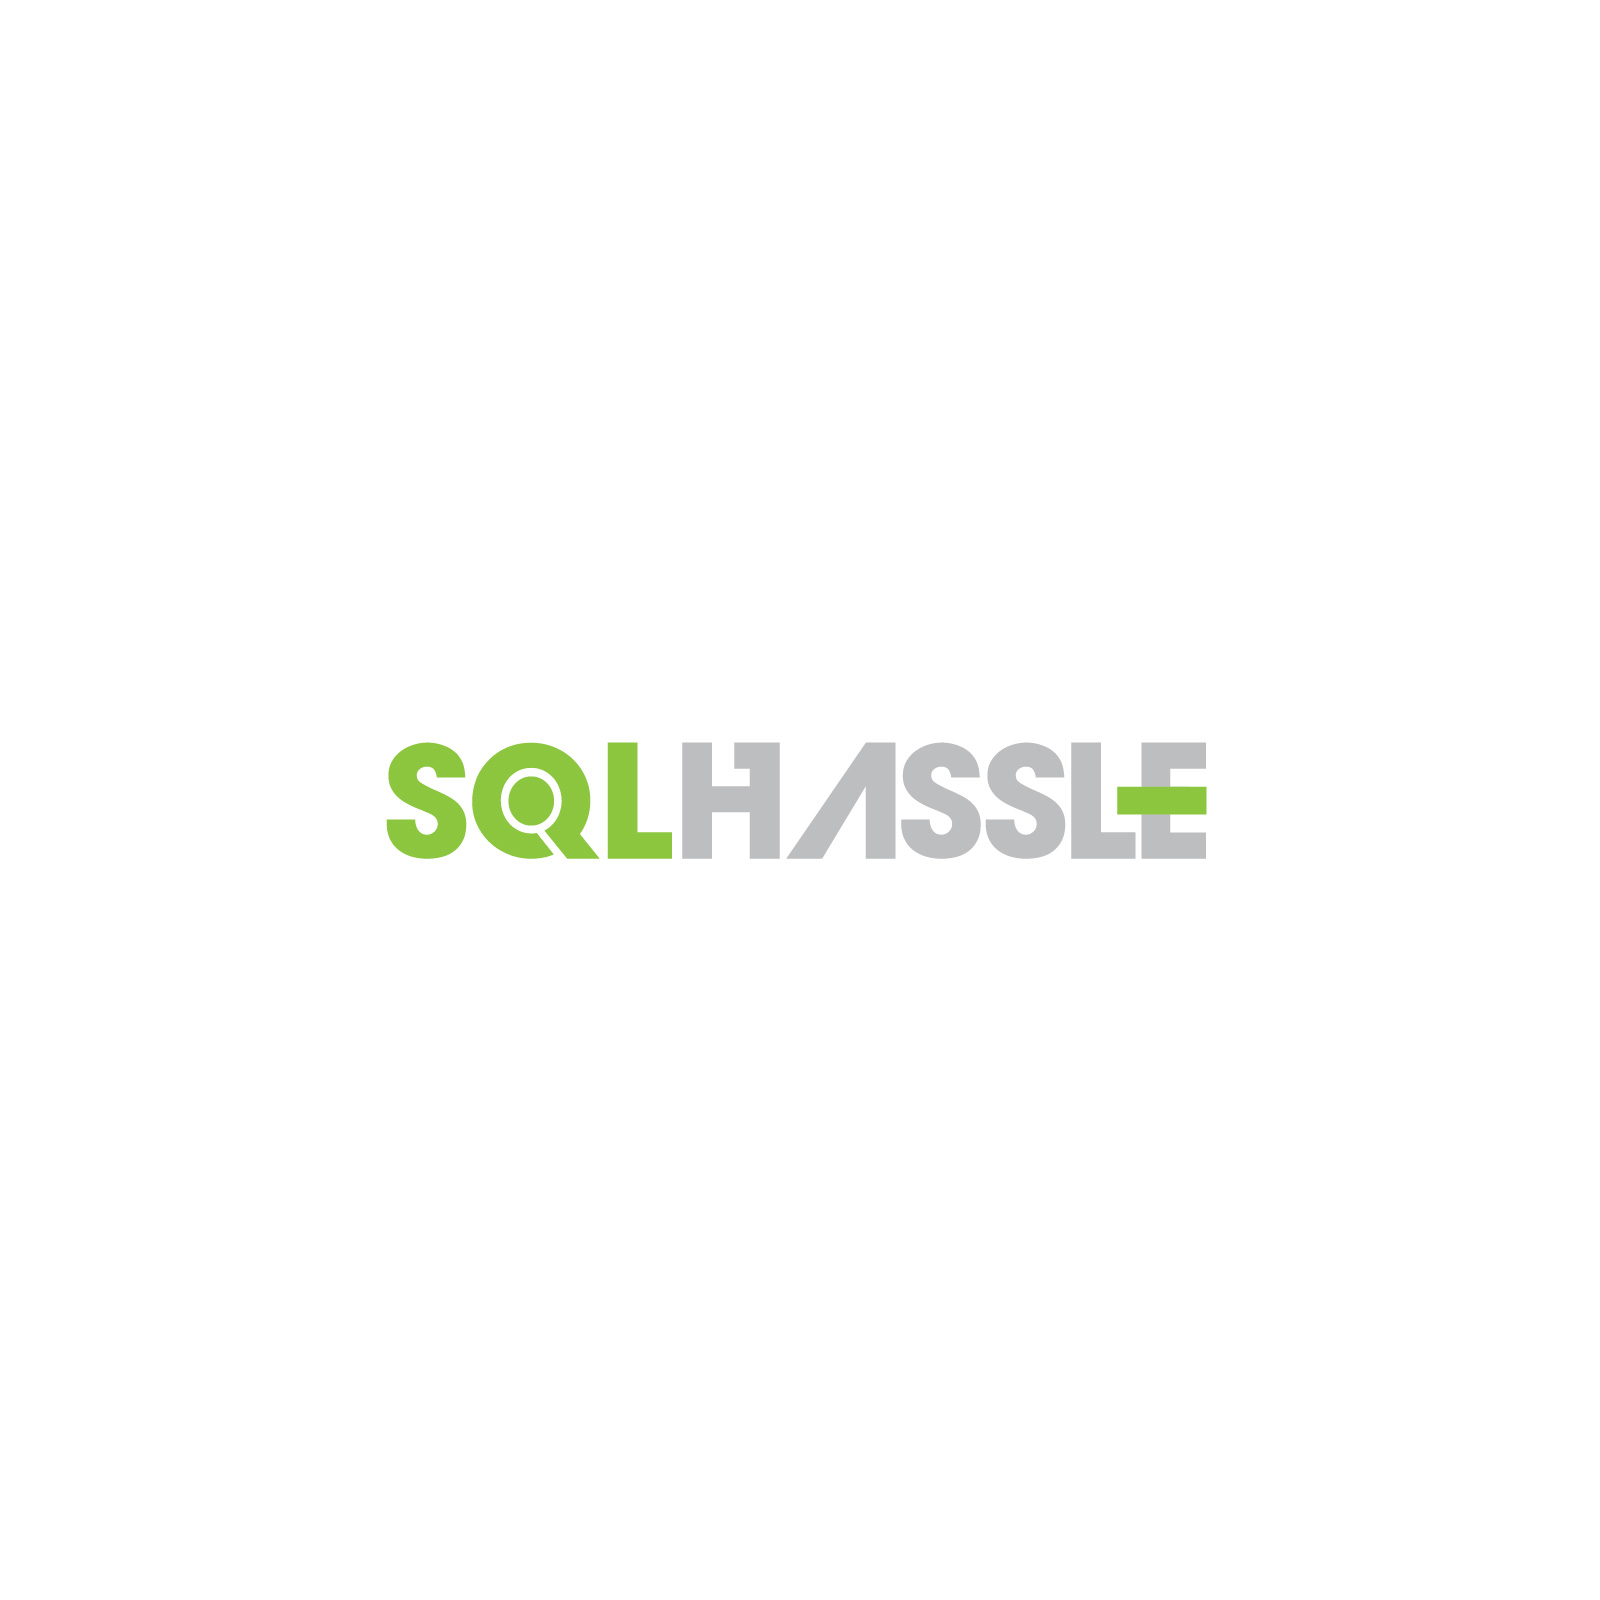 SQL Hassle